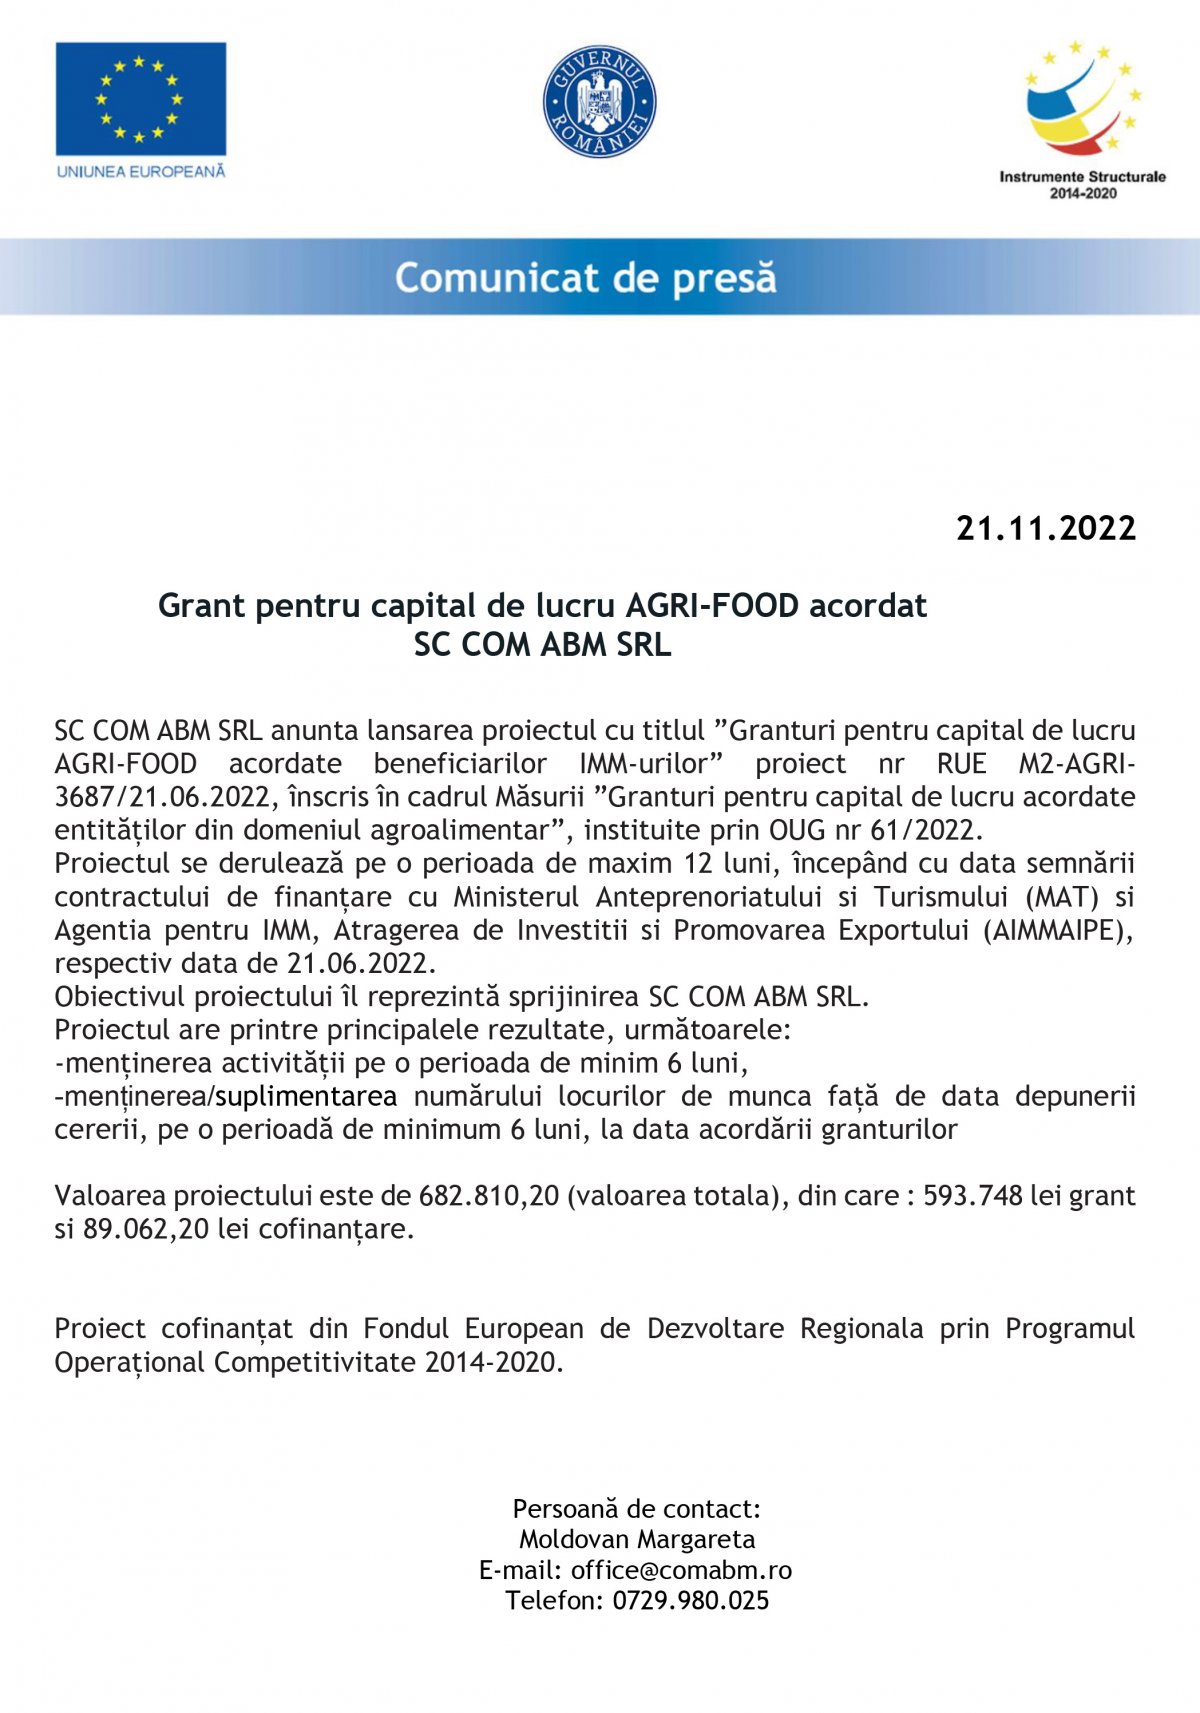 Grant pentru capital de lucru AGRI-FOOD acordat SC COM ABM SRL